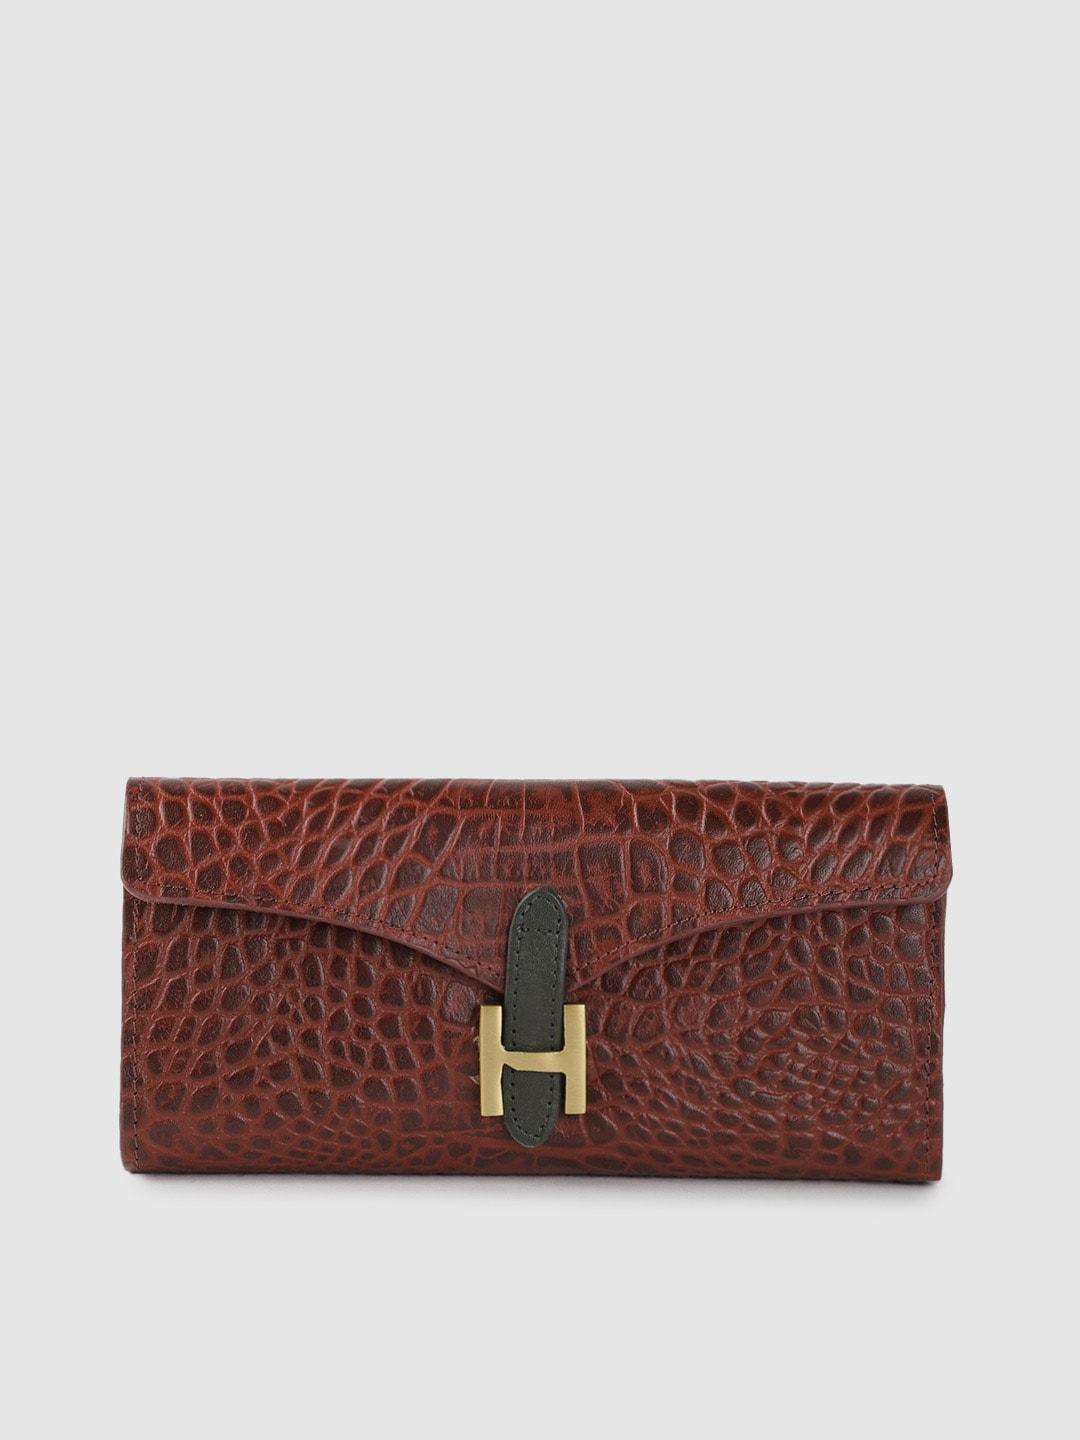 hidesign women maroon croc textured leather three fold wallet